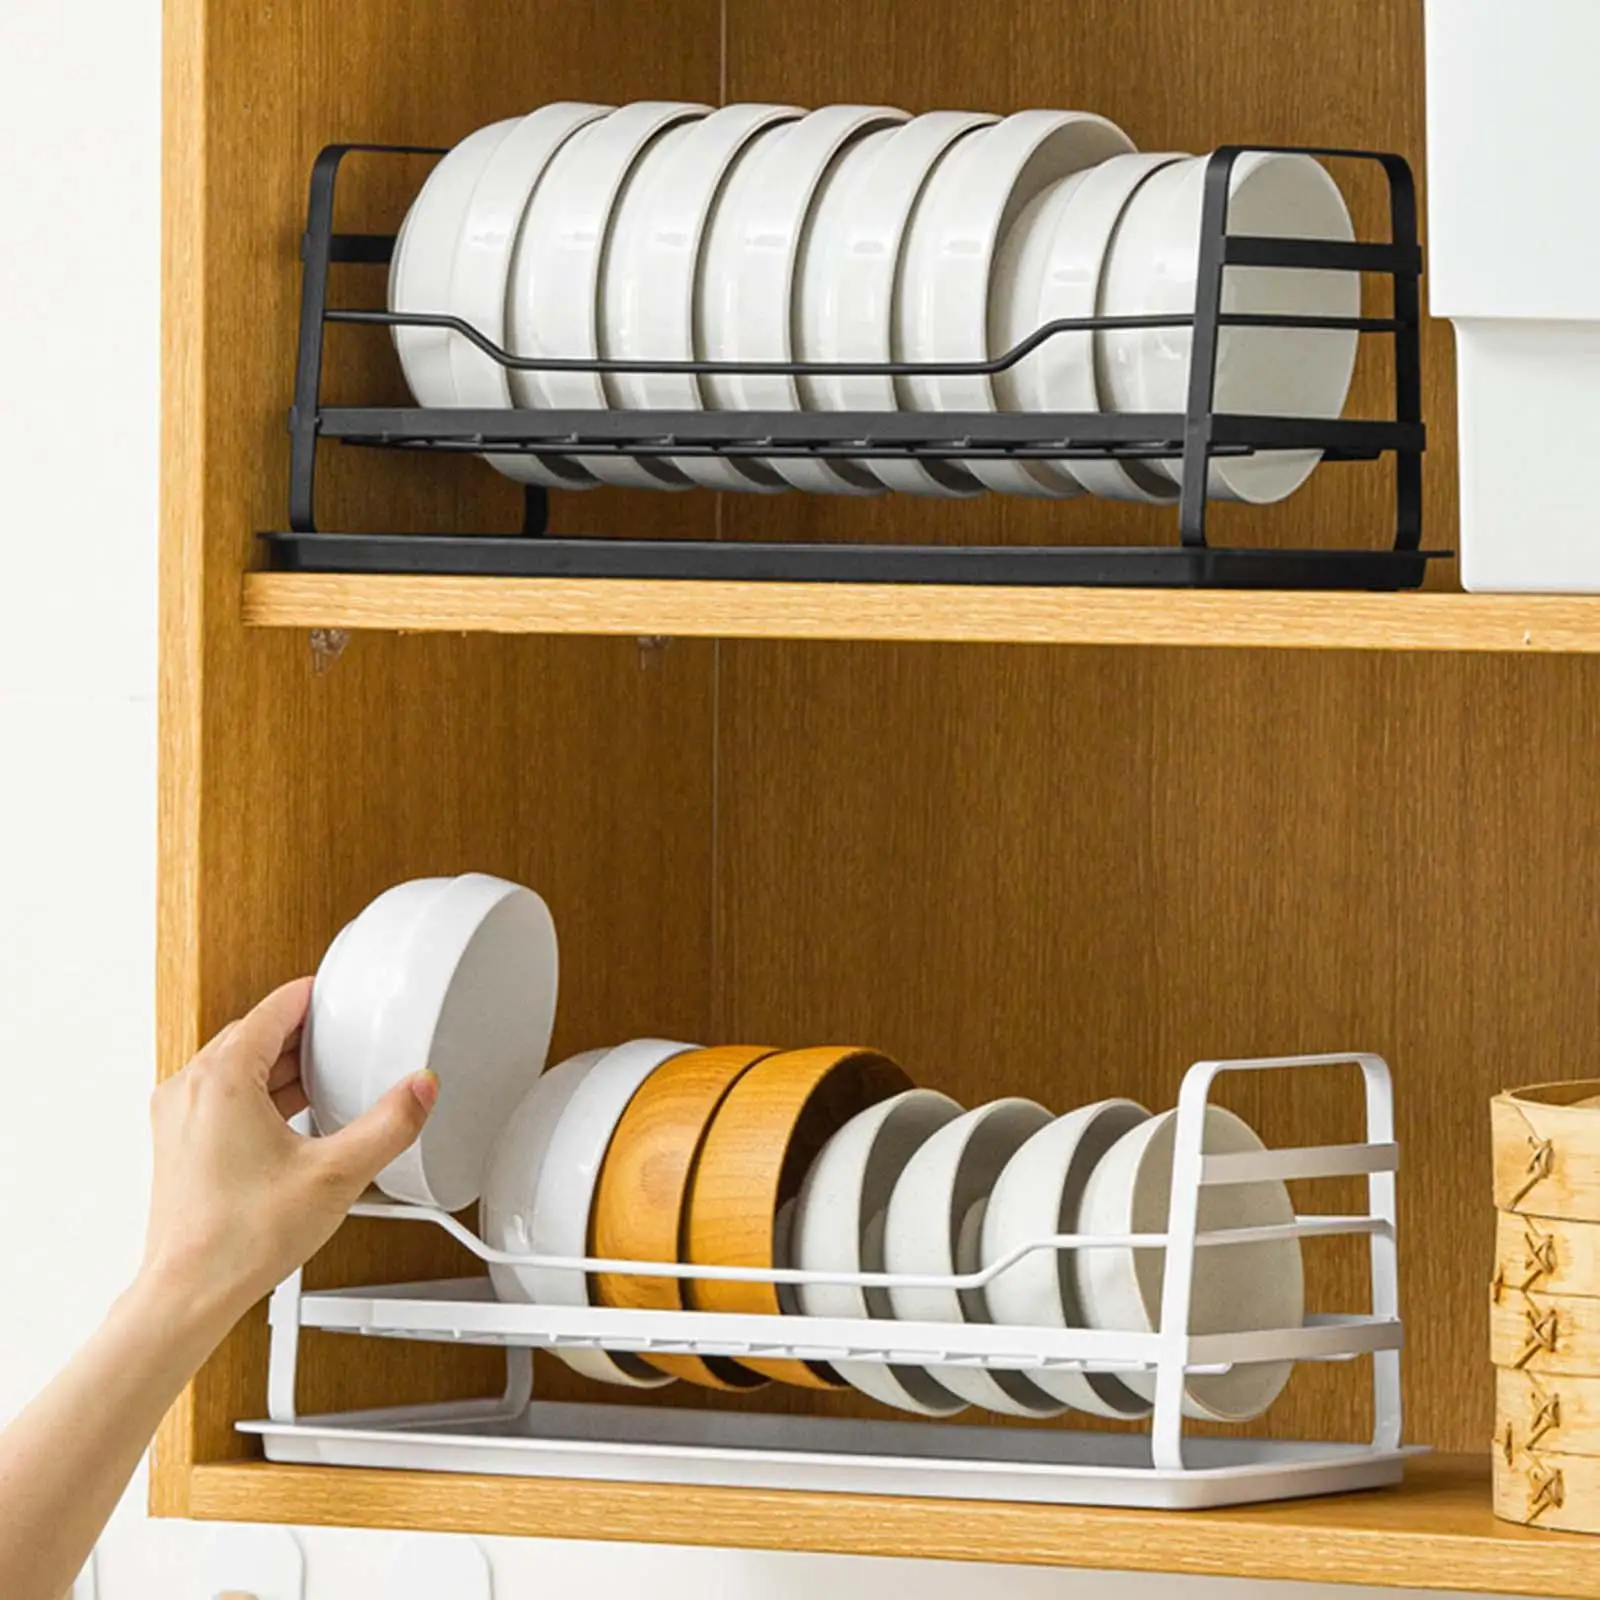 Iron Dish Drying Rack Organizer Cutlery Utensil Holder with Drip Tray Kitchen Countertop Dish Drainer Dishes Draining Holder